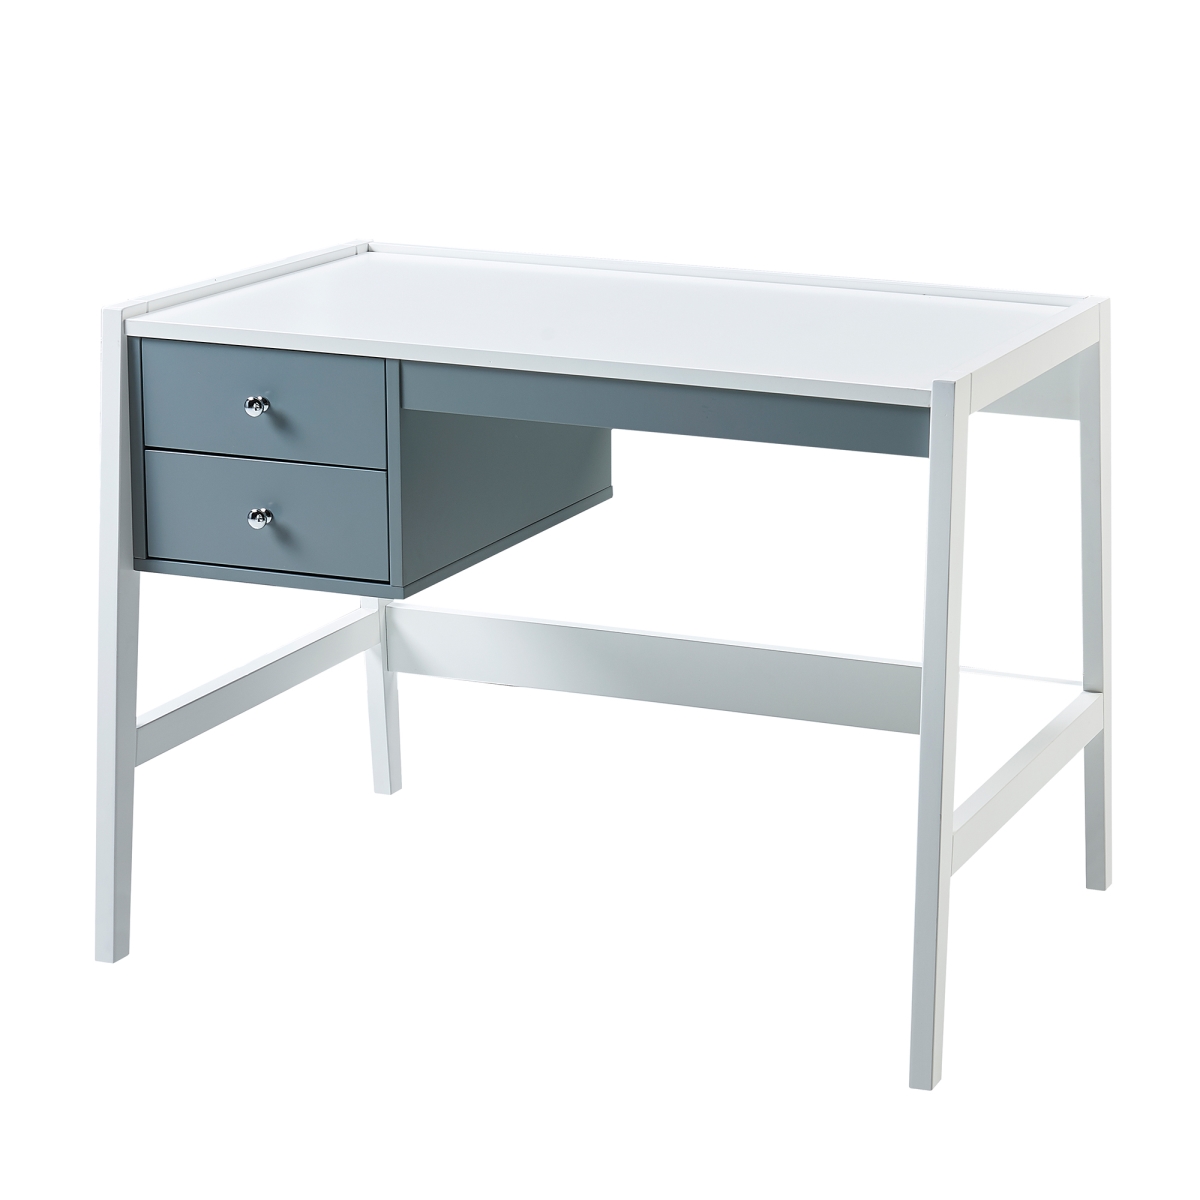 Vnf-00009 Minimalista Single Desk, White & Grey